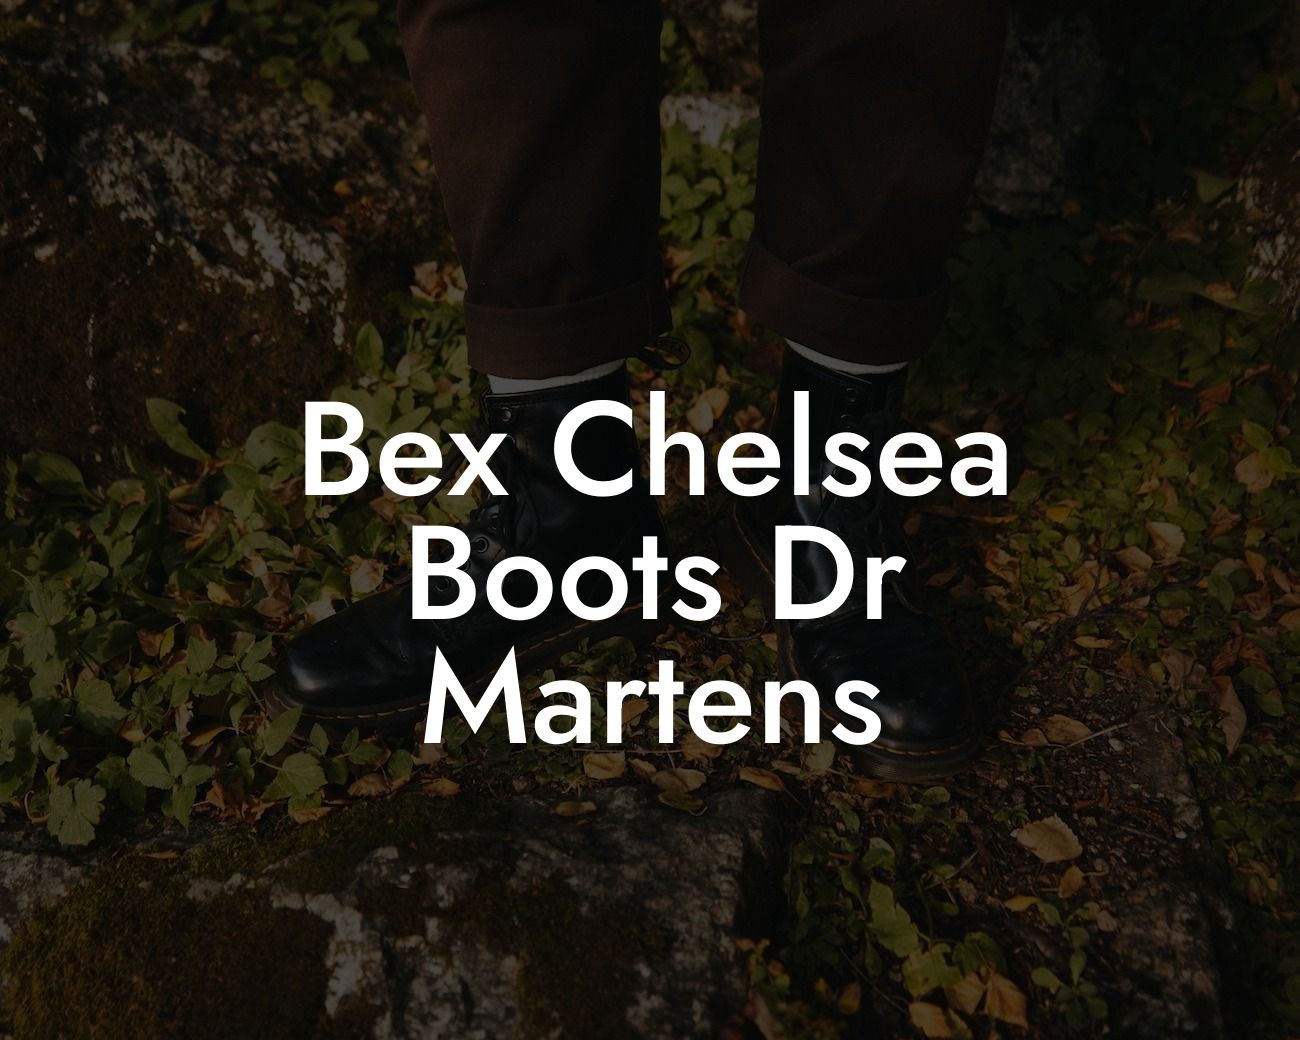 Bex Chelsea Boots Dr Martens